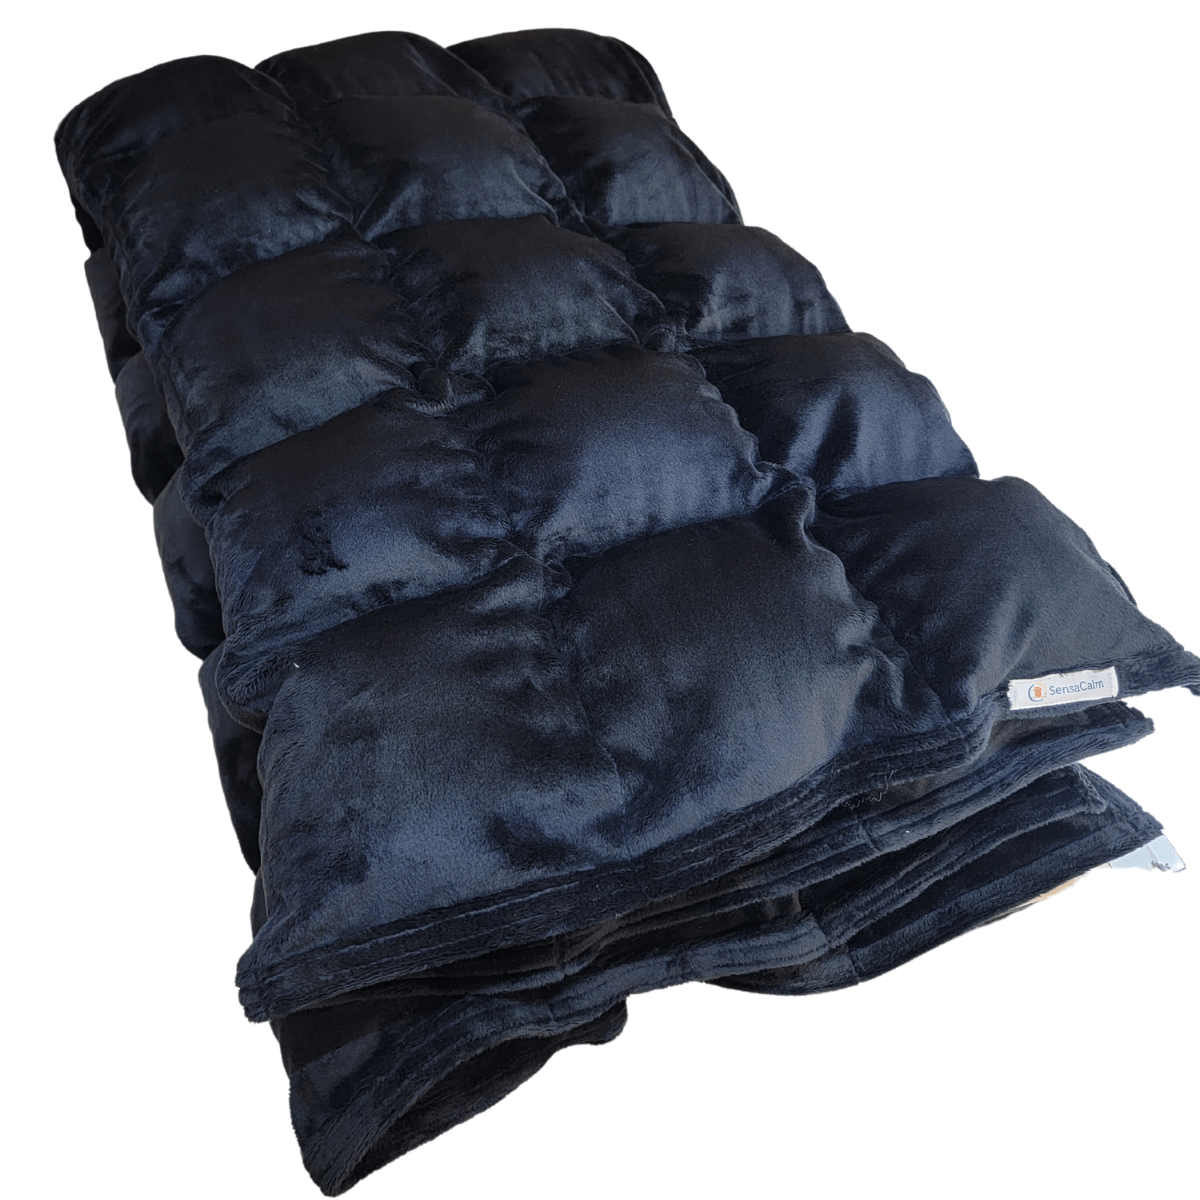 Cuddle Weighted Blanket - Black Cuddle